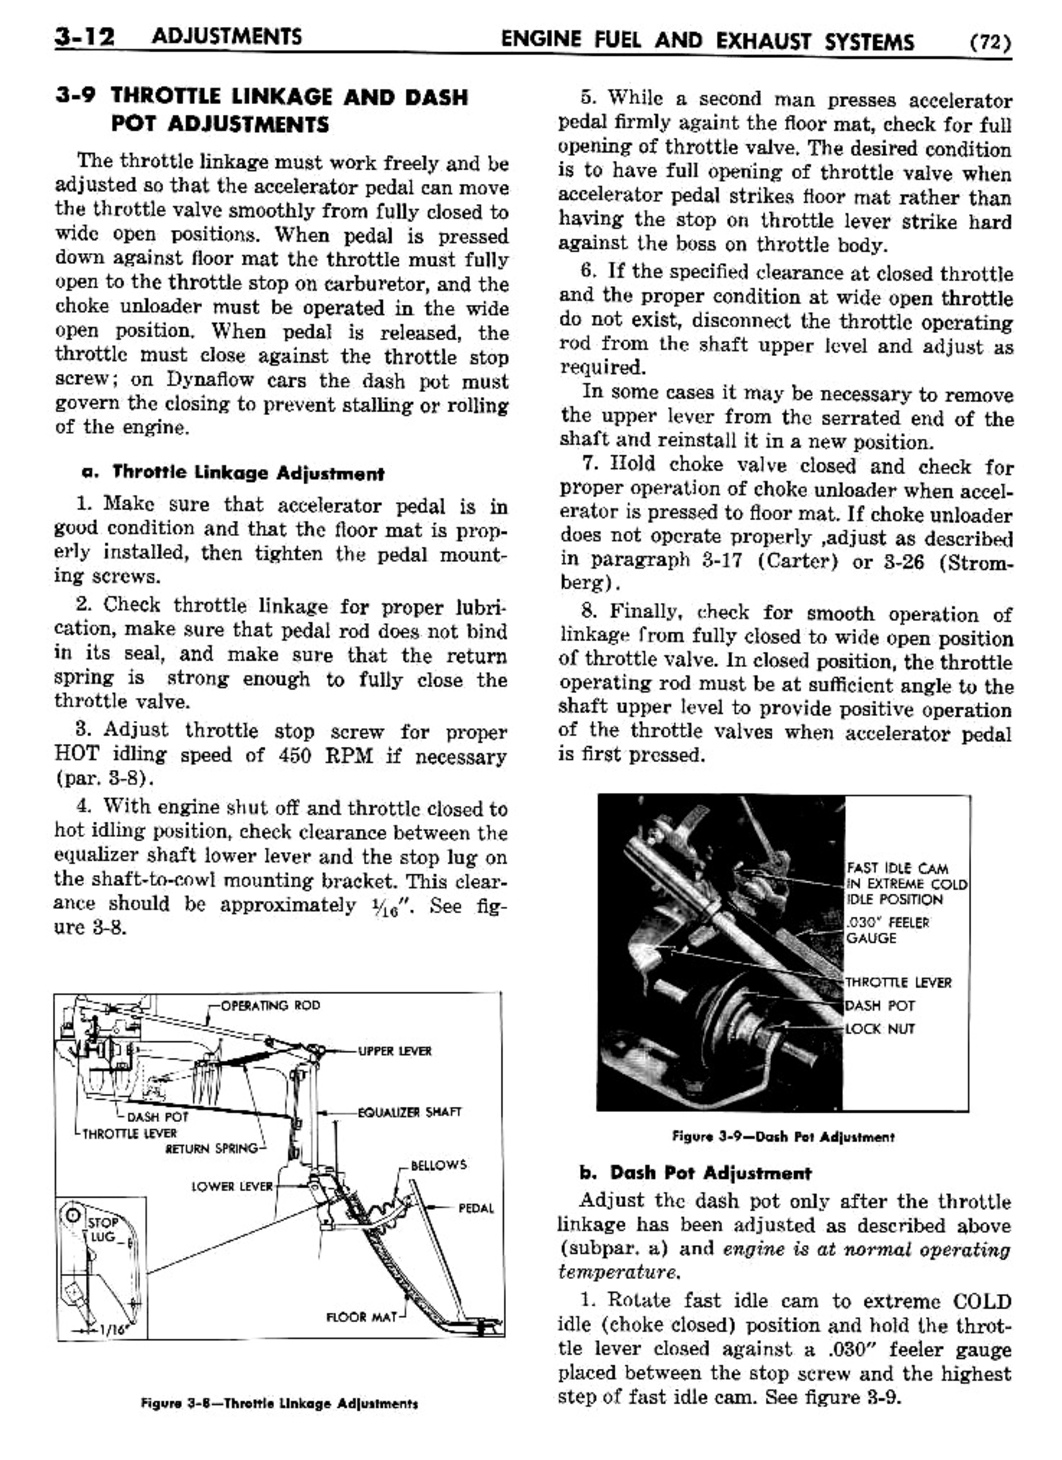 n_04 1954 Buick Shop Manual - Engine Fuel & Exhaust-012-012.jpg